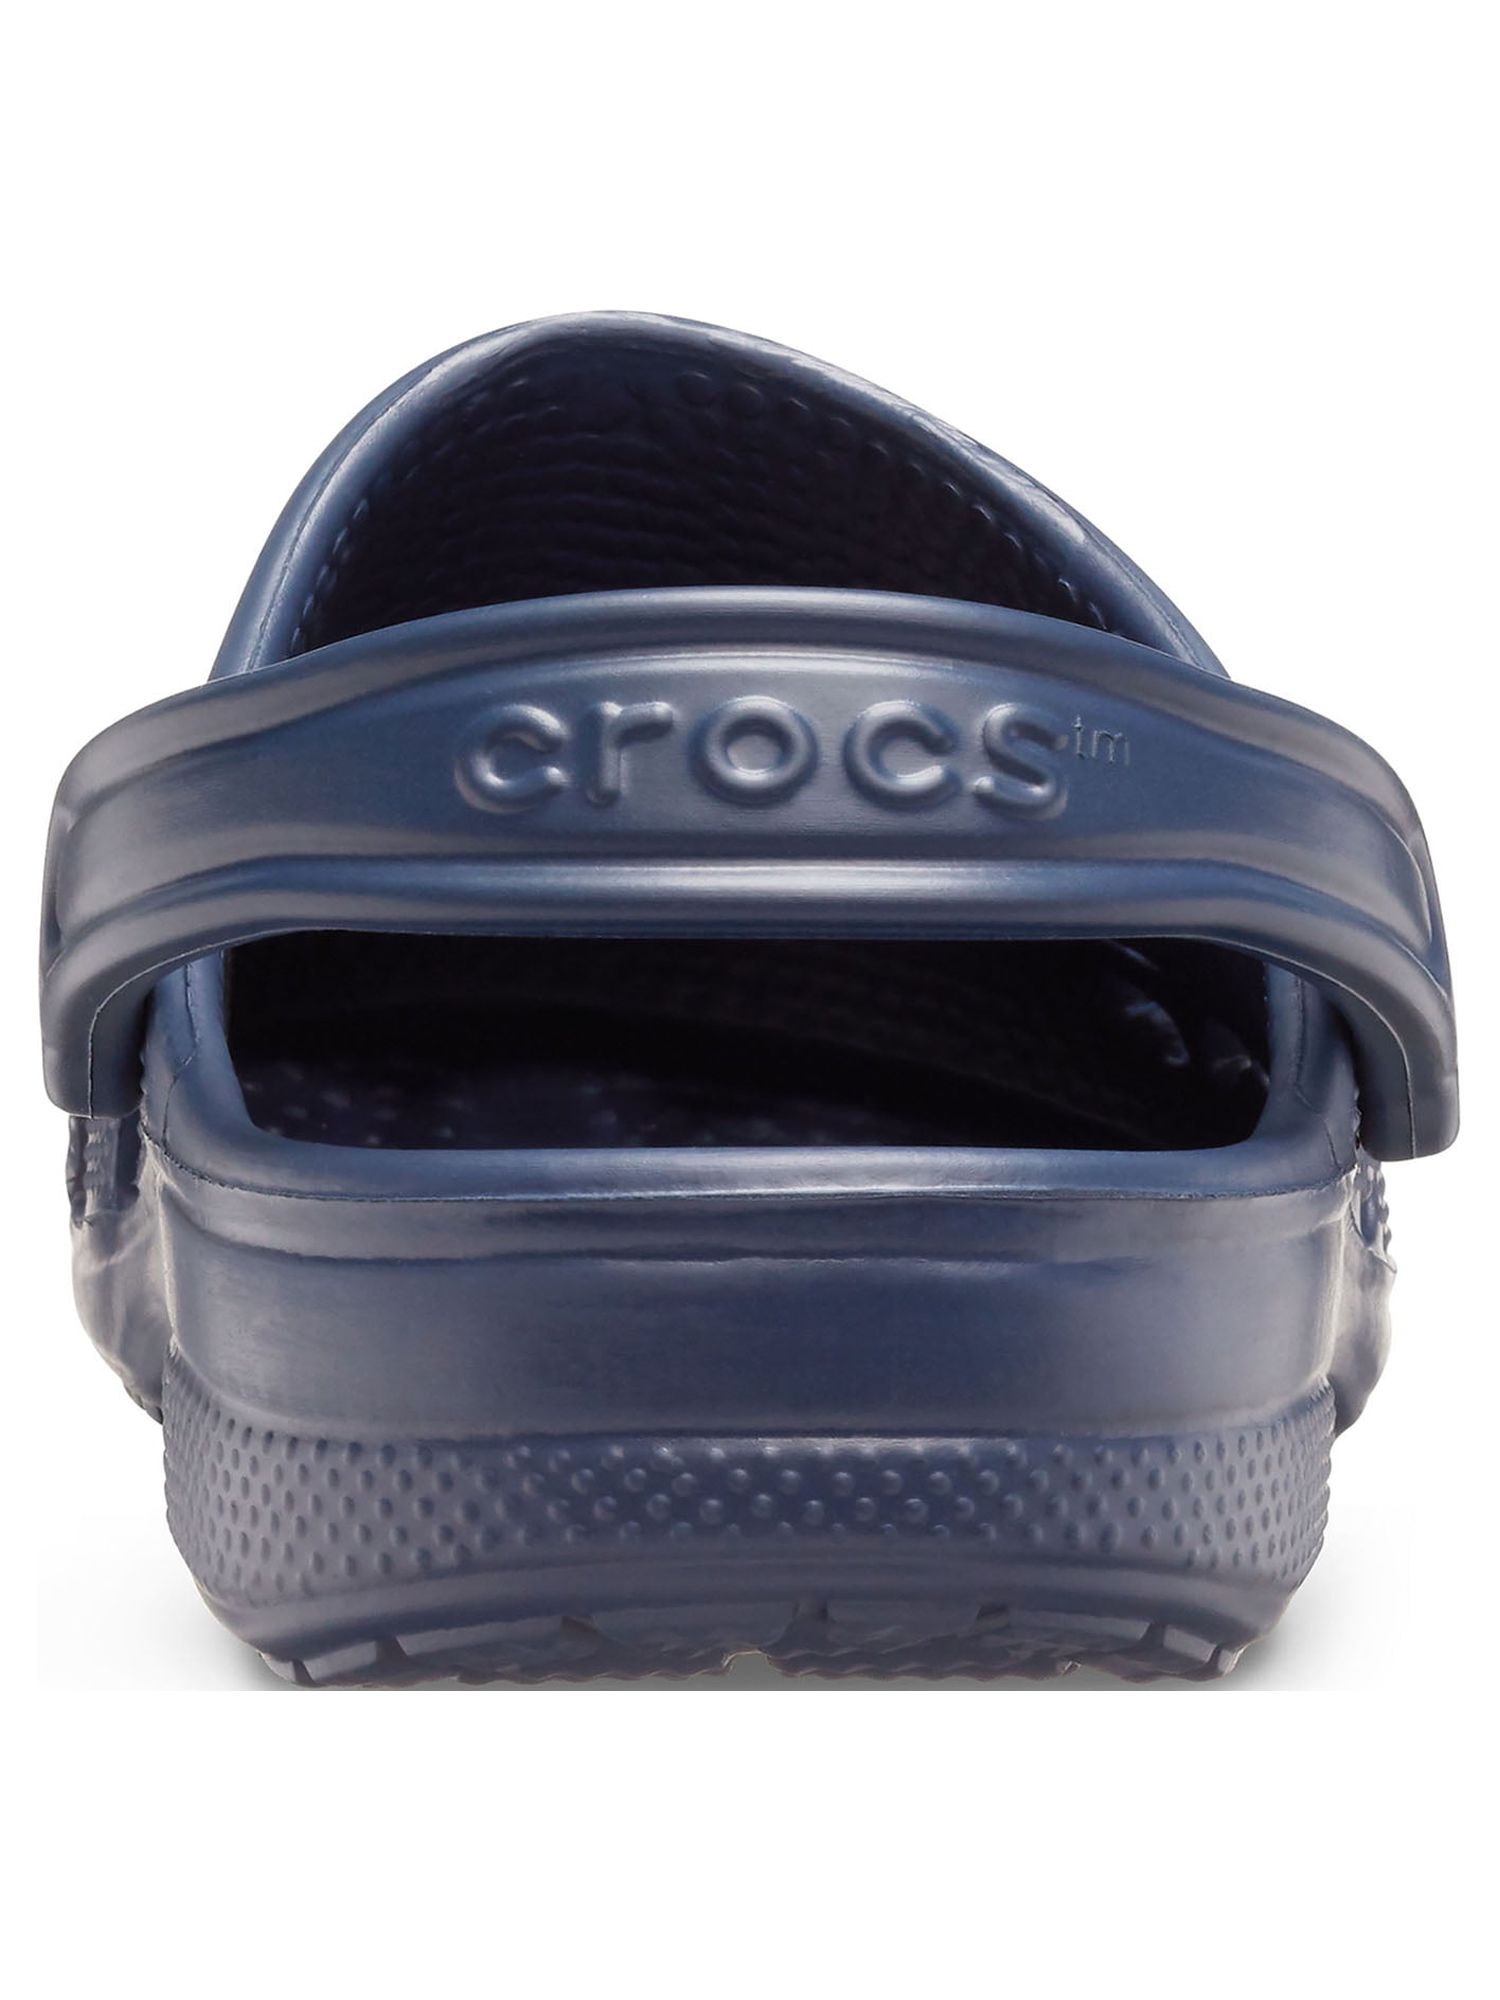 Crocs Men's and Women's Unisex Baya Clog Sandals - image 4 of 6